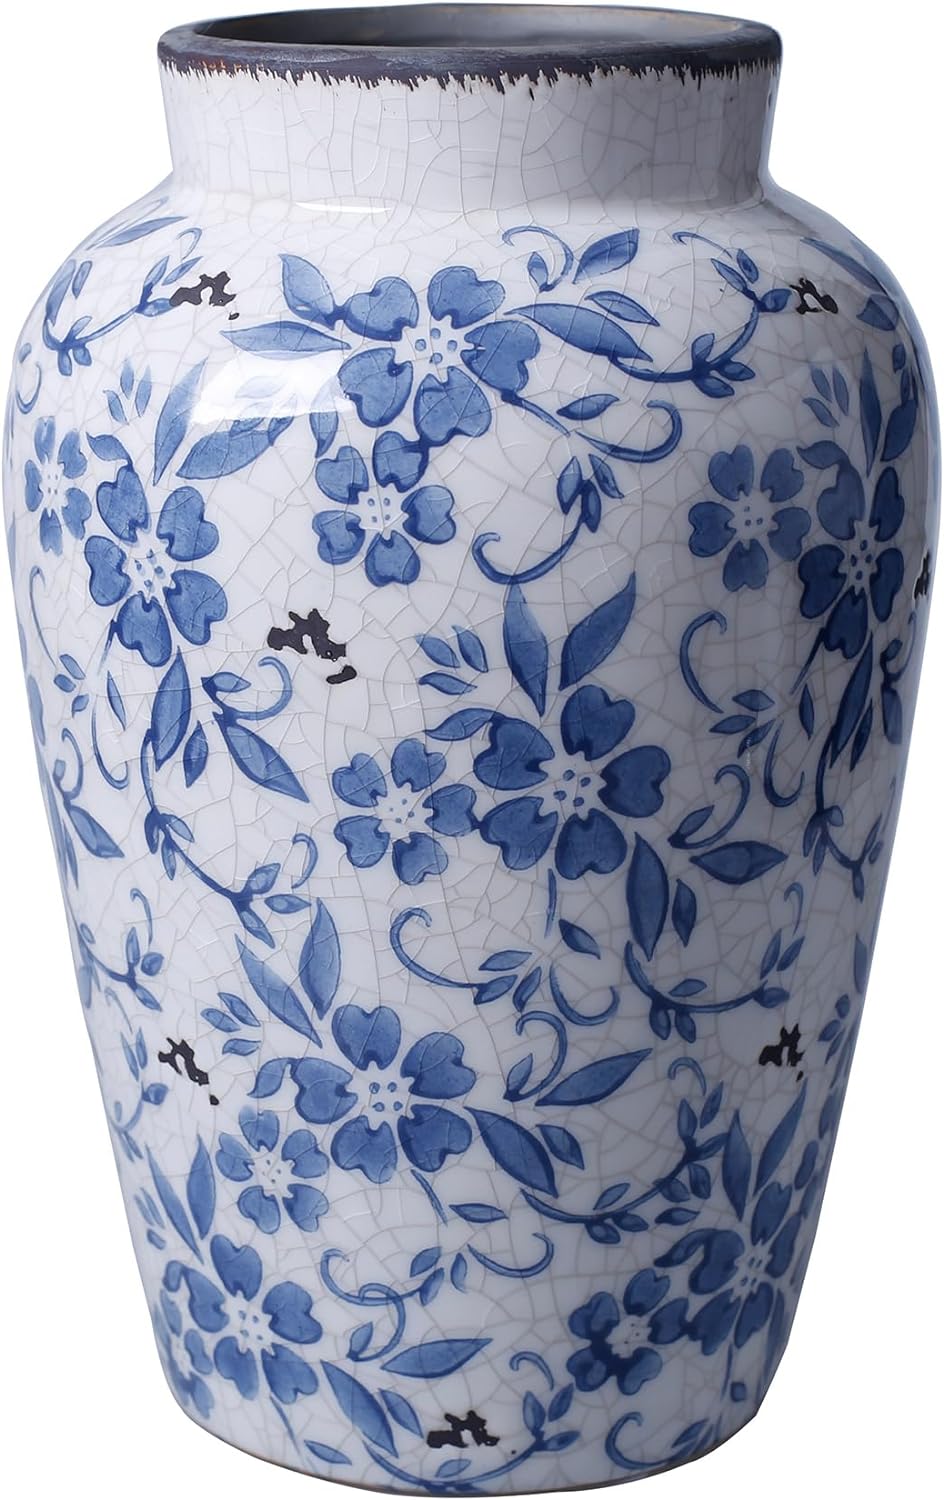 Vintage Blue and White Vase Porcelain Flower Vase Ceramic for Home Christmas Decor Rustic